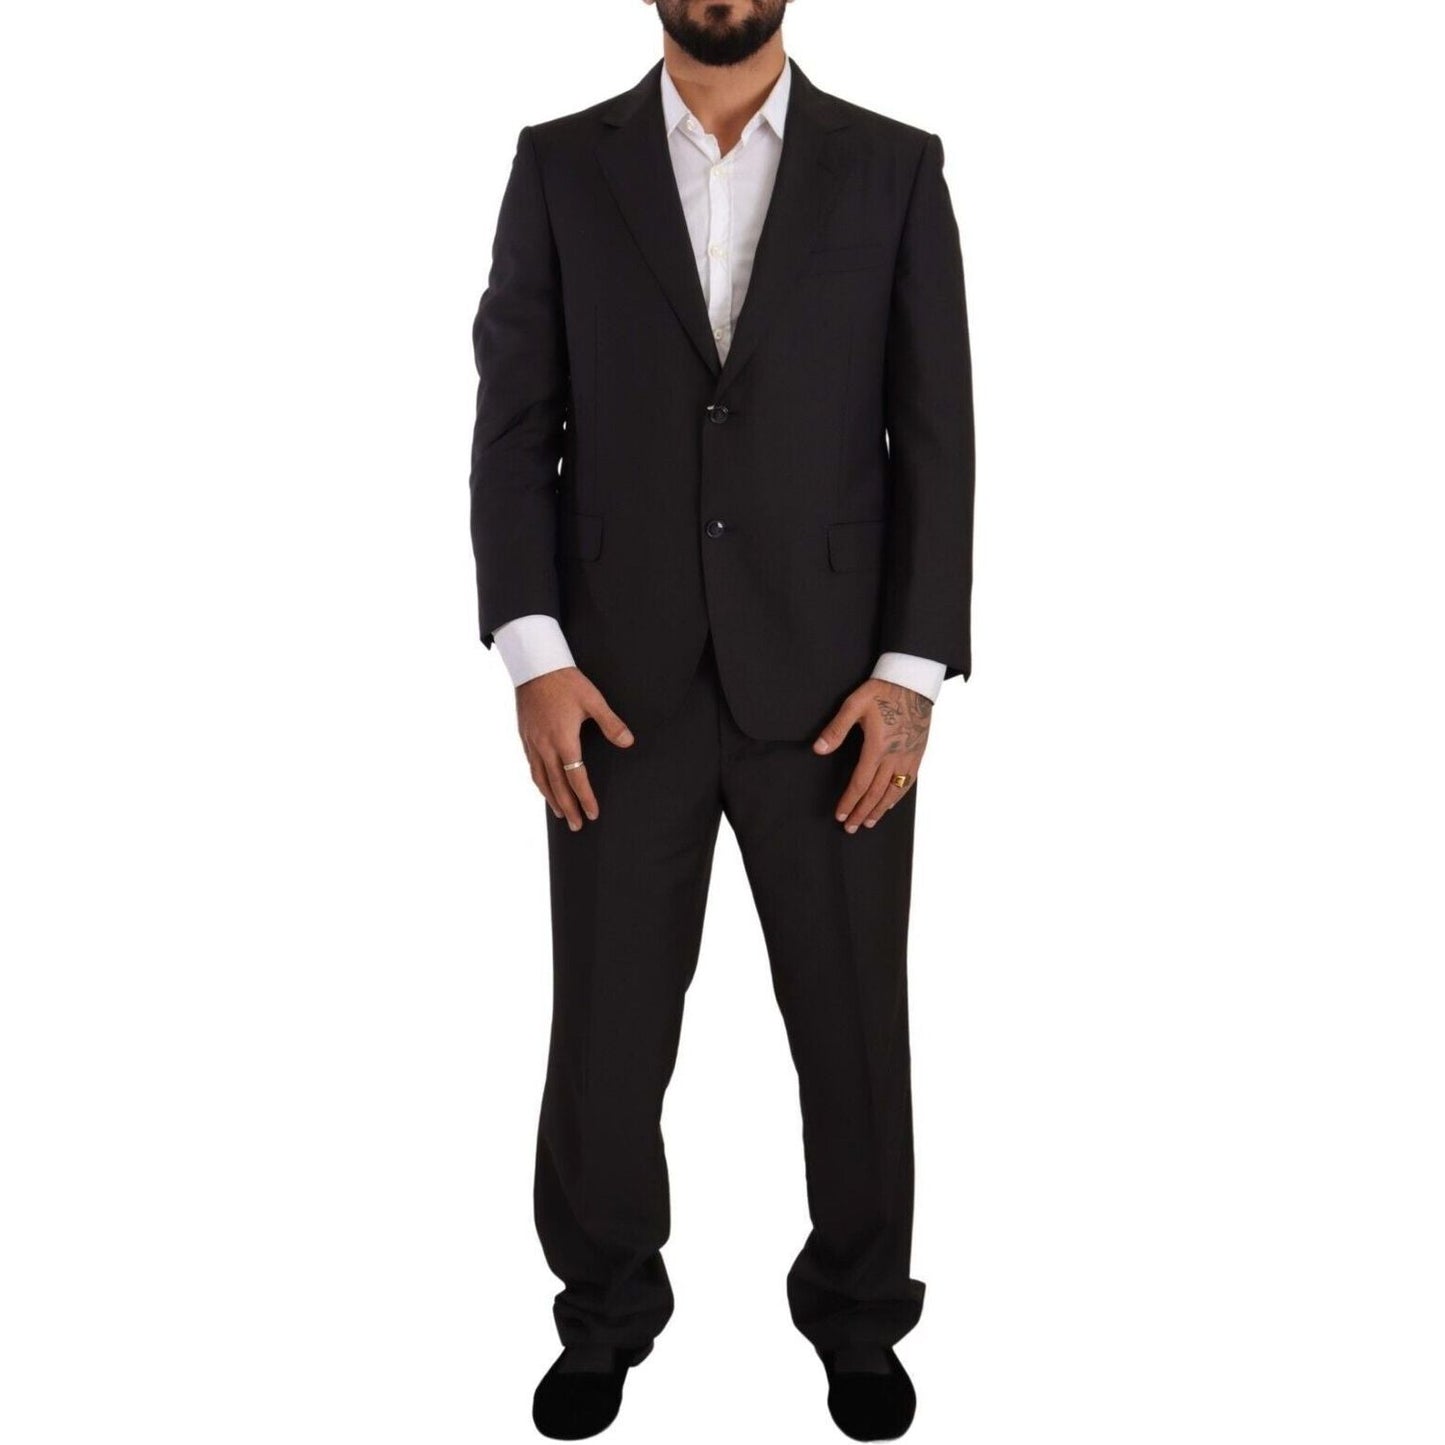 Domenico Tagliente Elegant Dark Grey Two-Piece Suit dark-gray-single-breasted-formal-suit s-l1600-16-6-6b994ed3-680.jpg